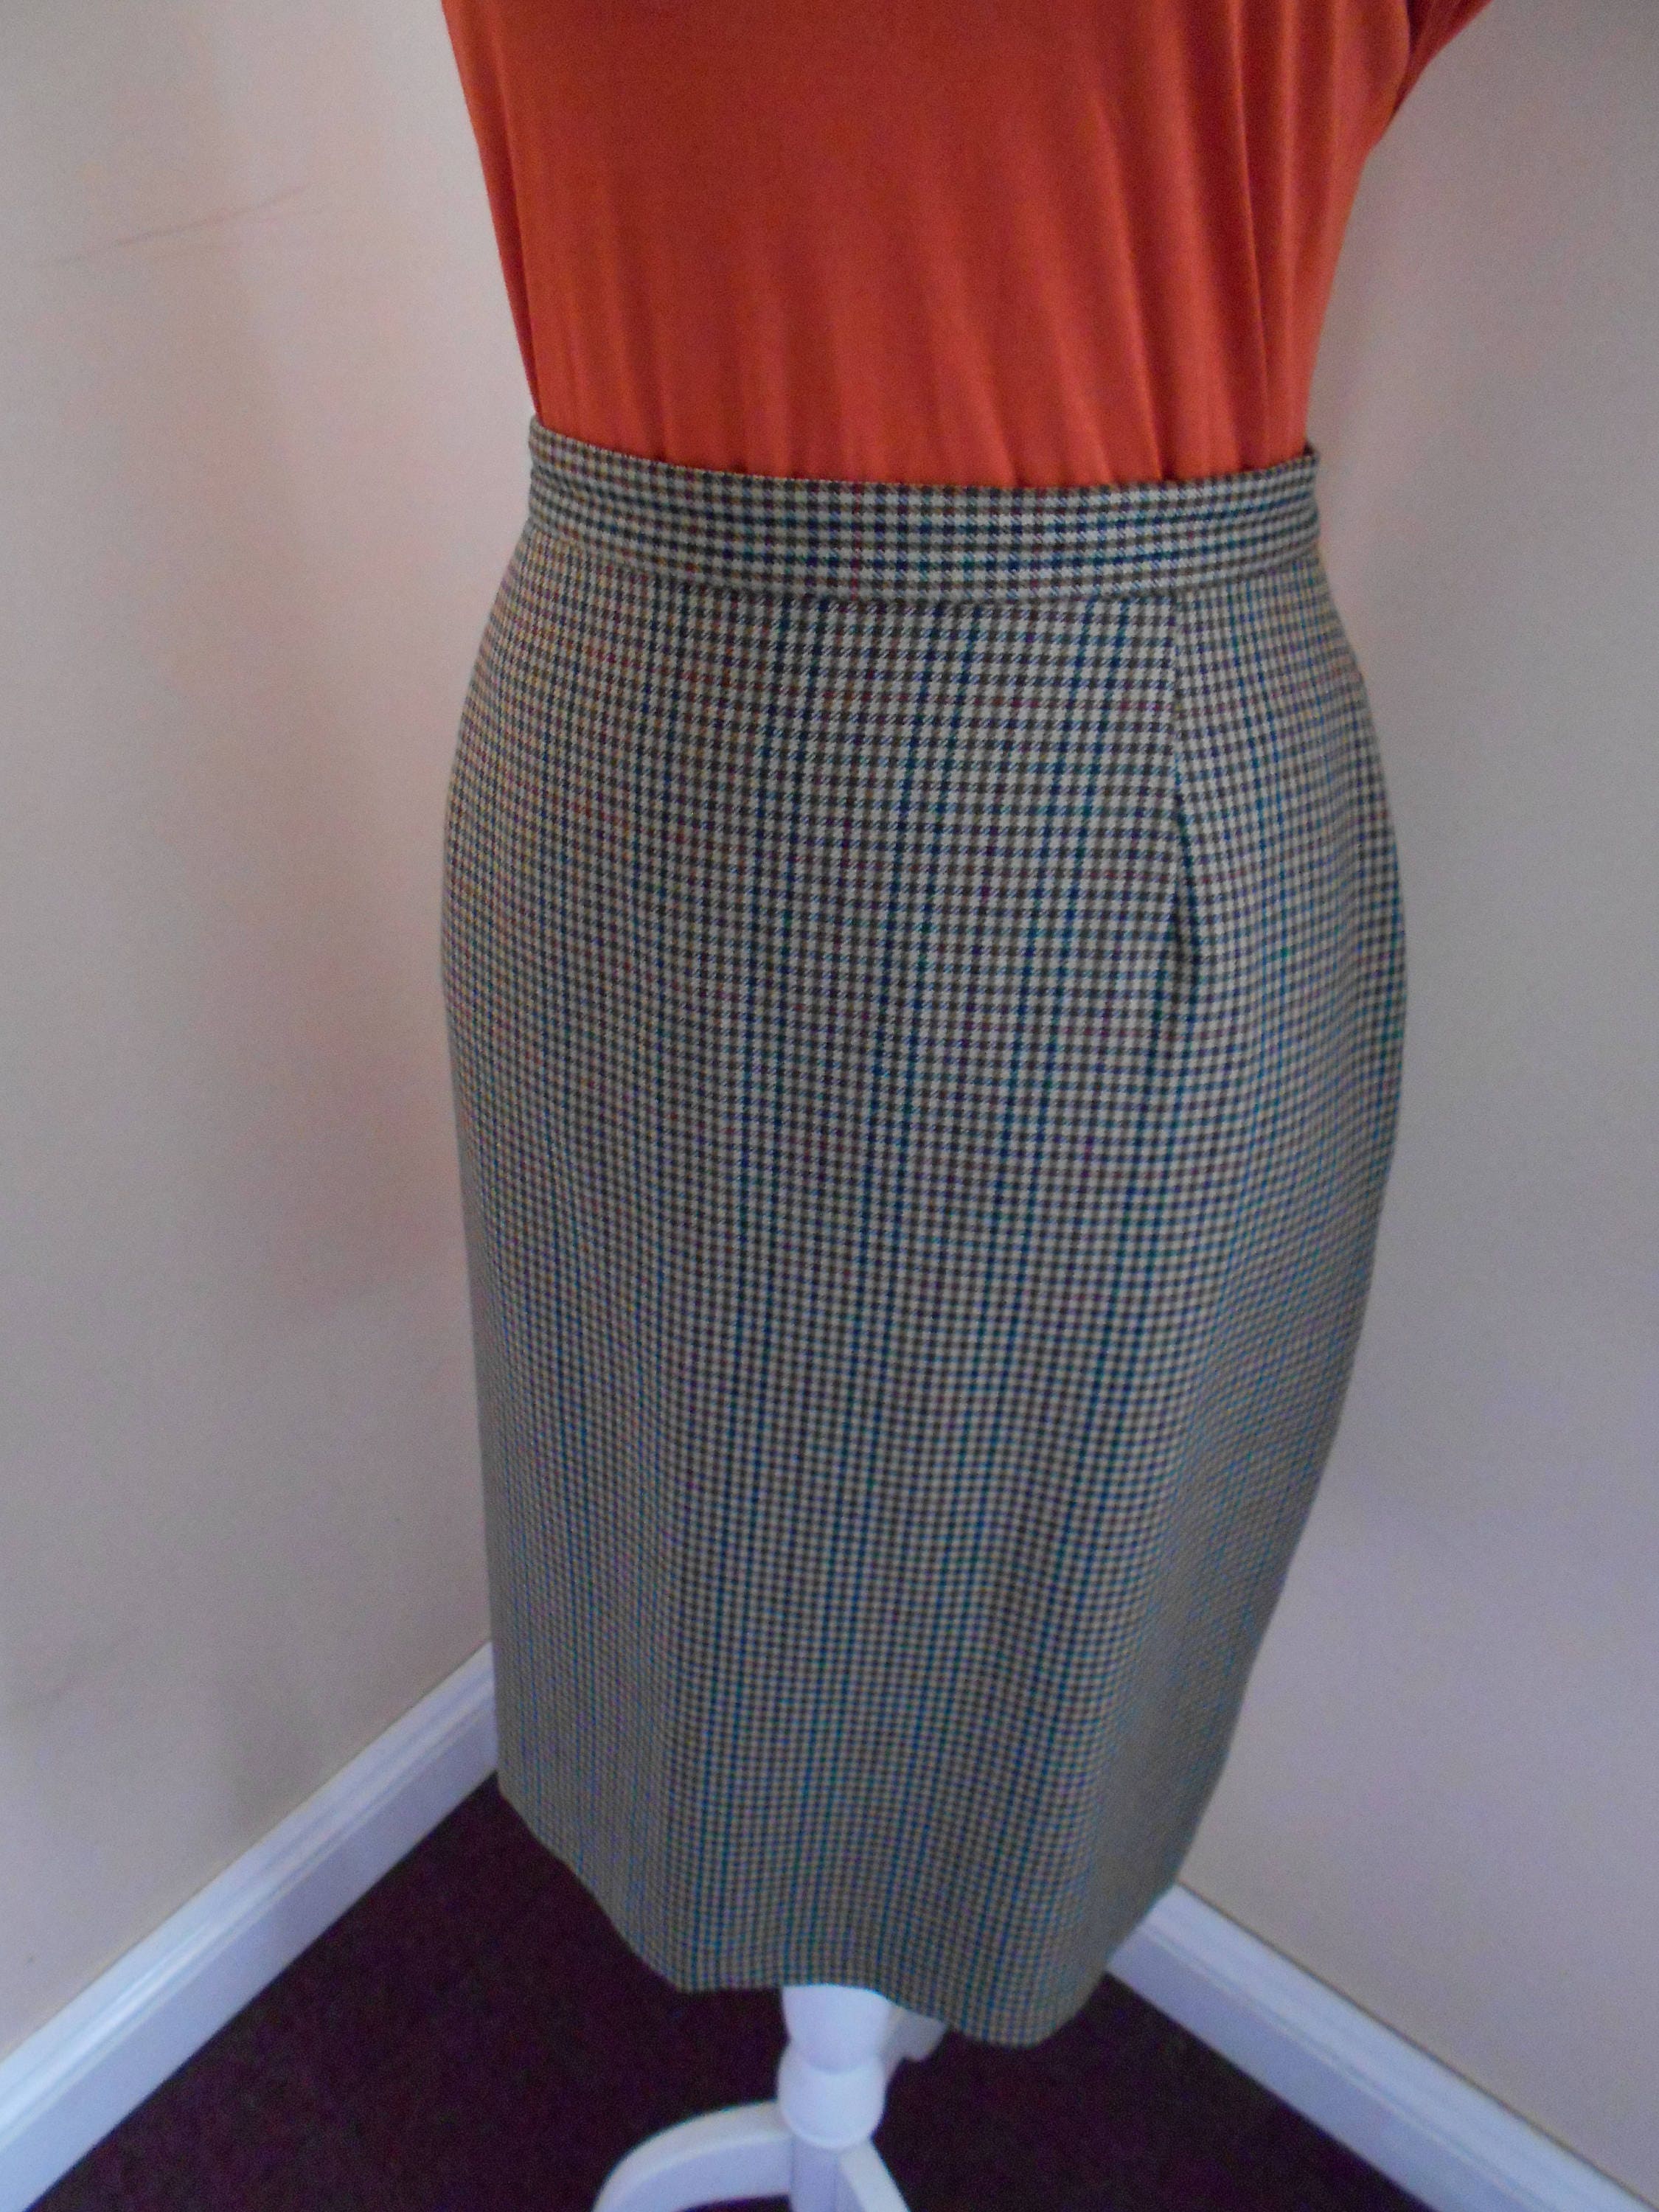 Vintage Check Skirt | Etsy